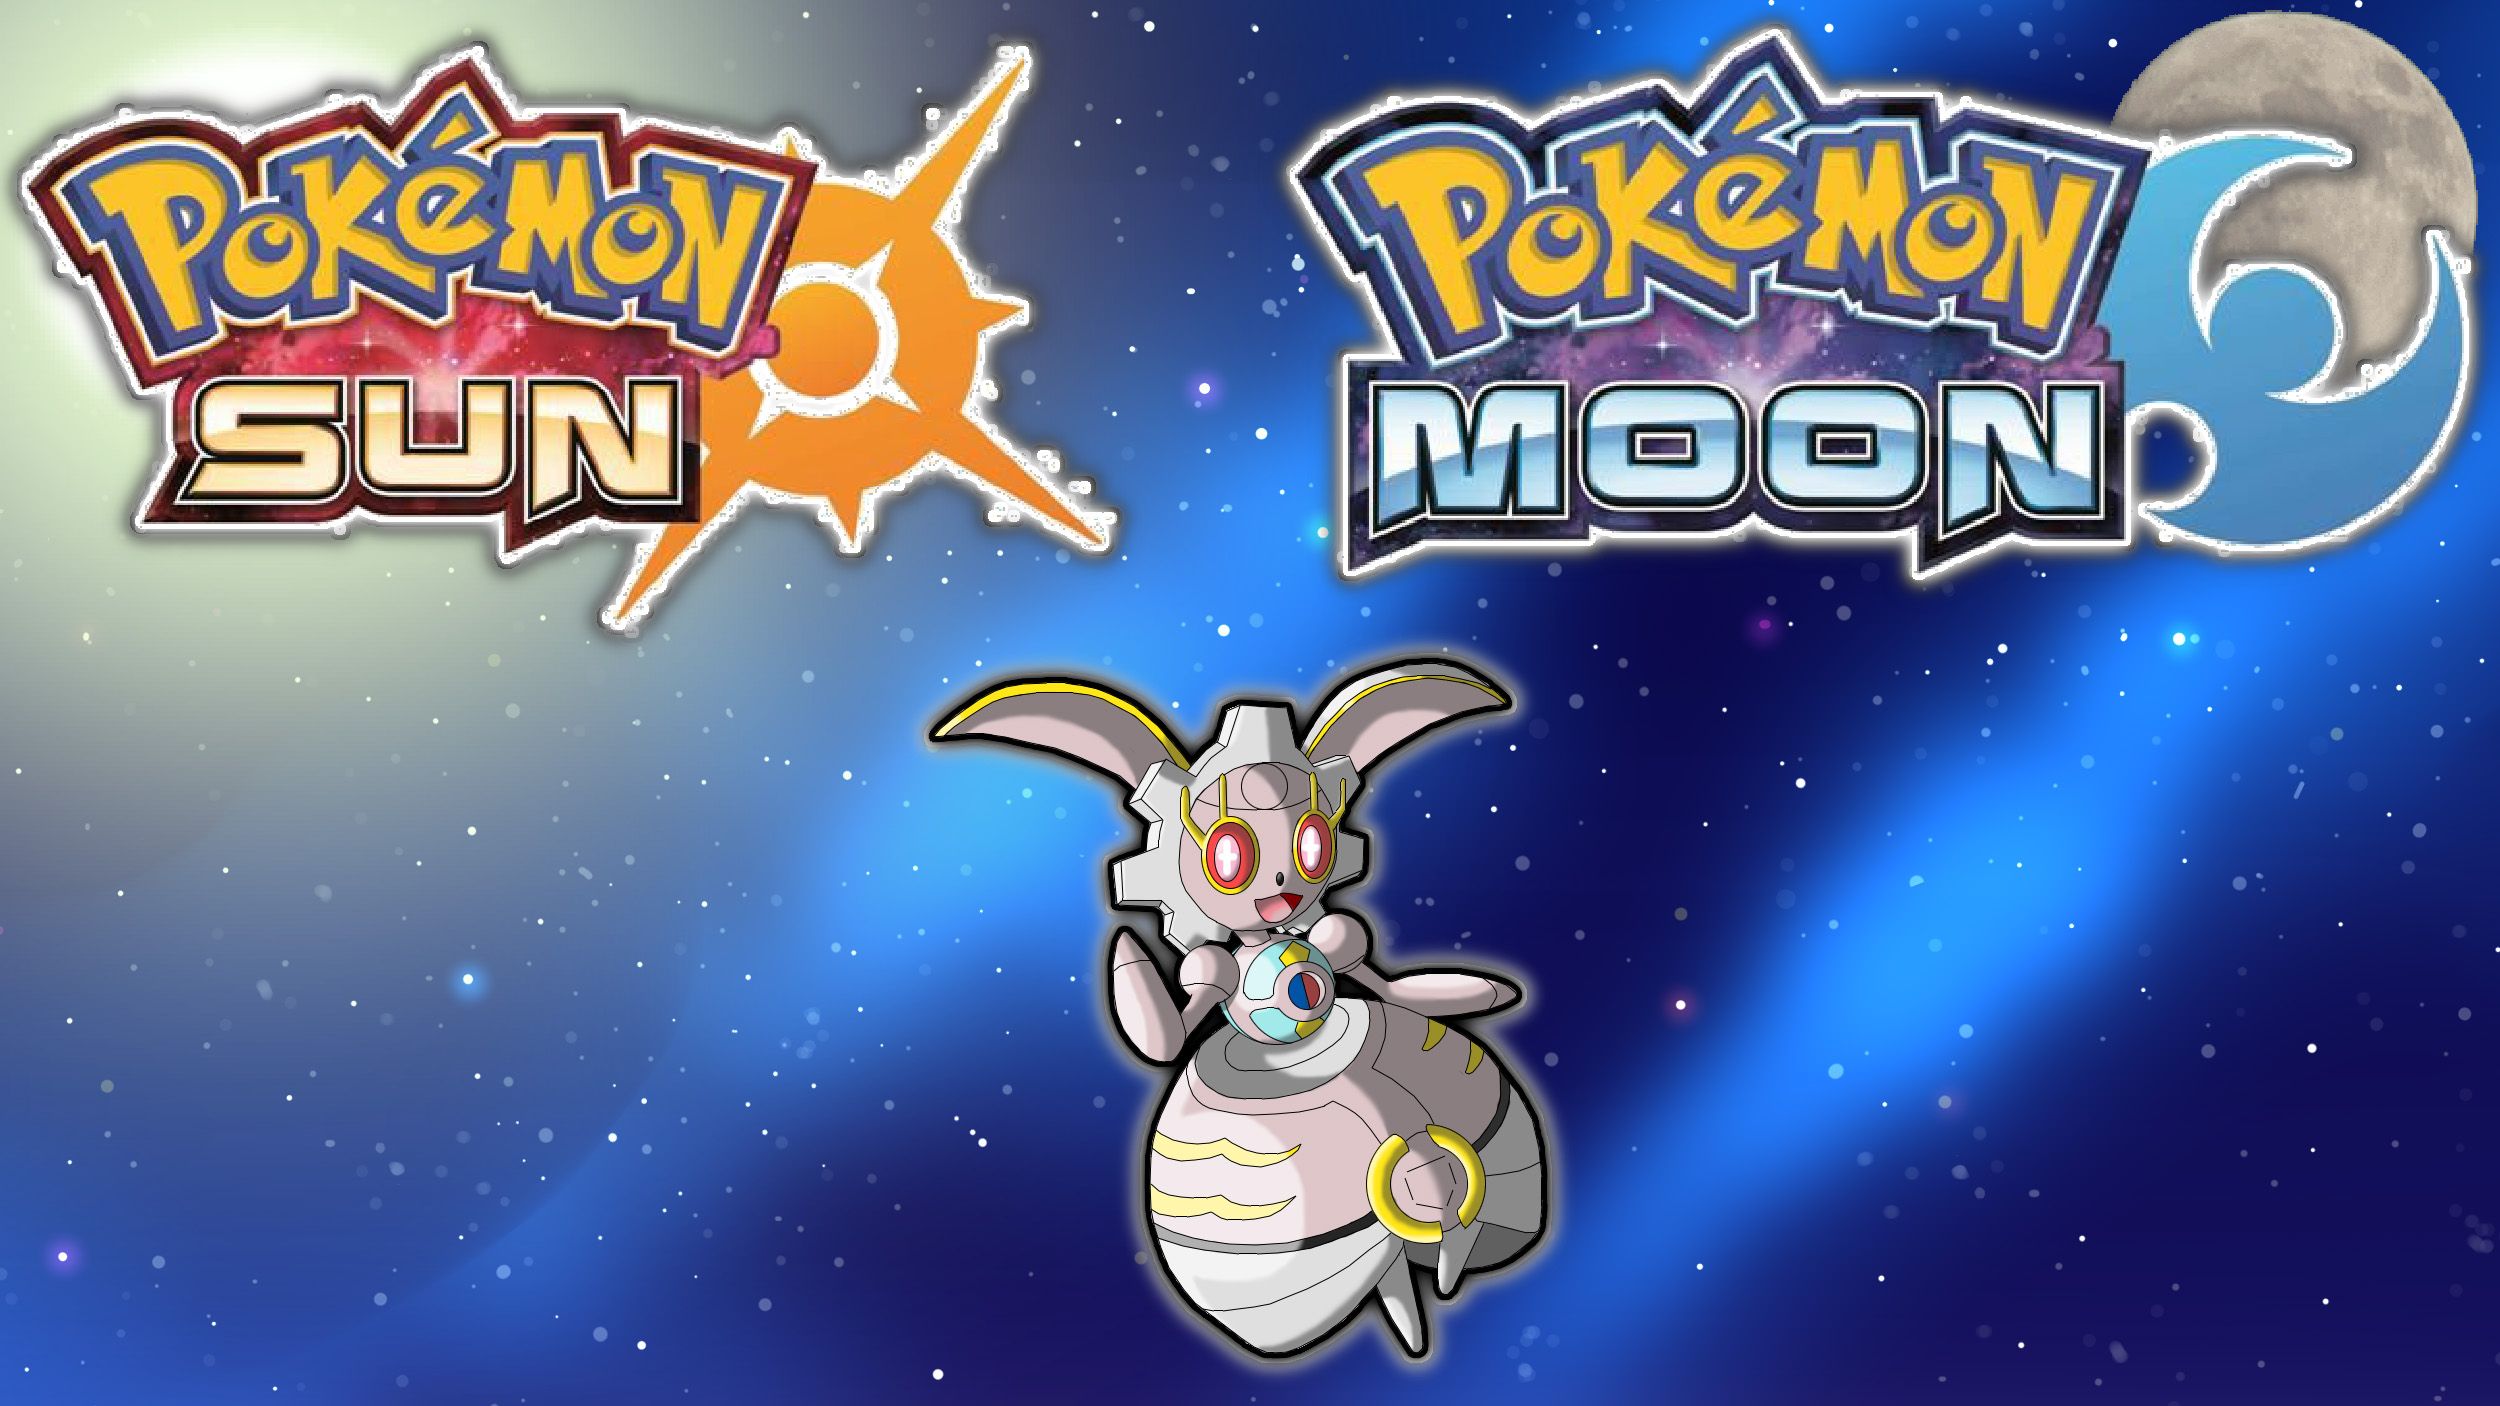 pokemon moon download 3ds